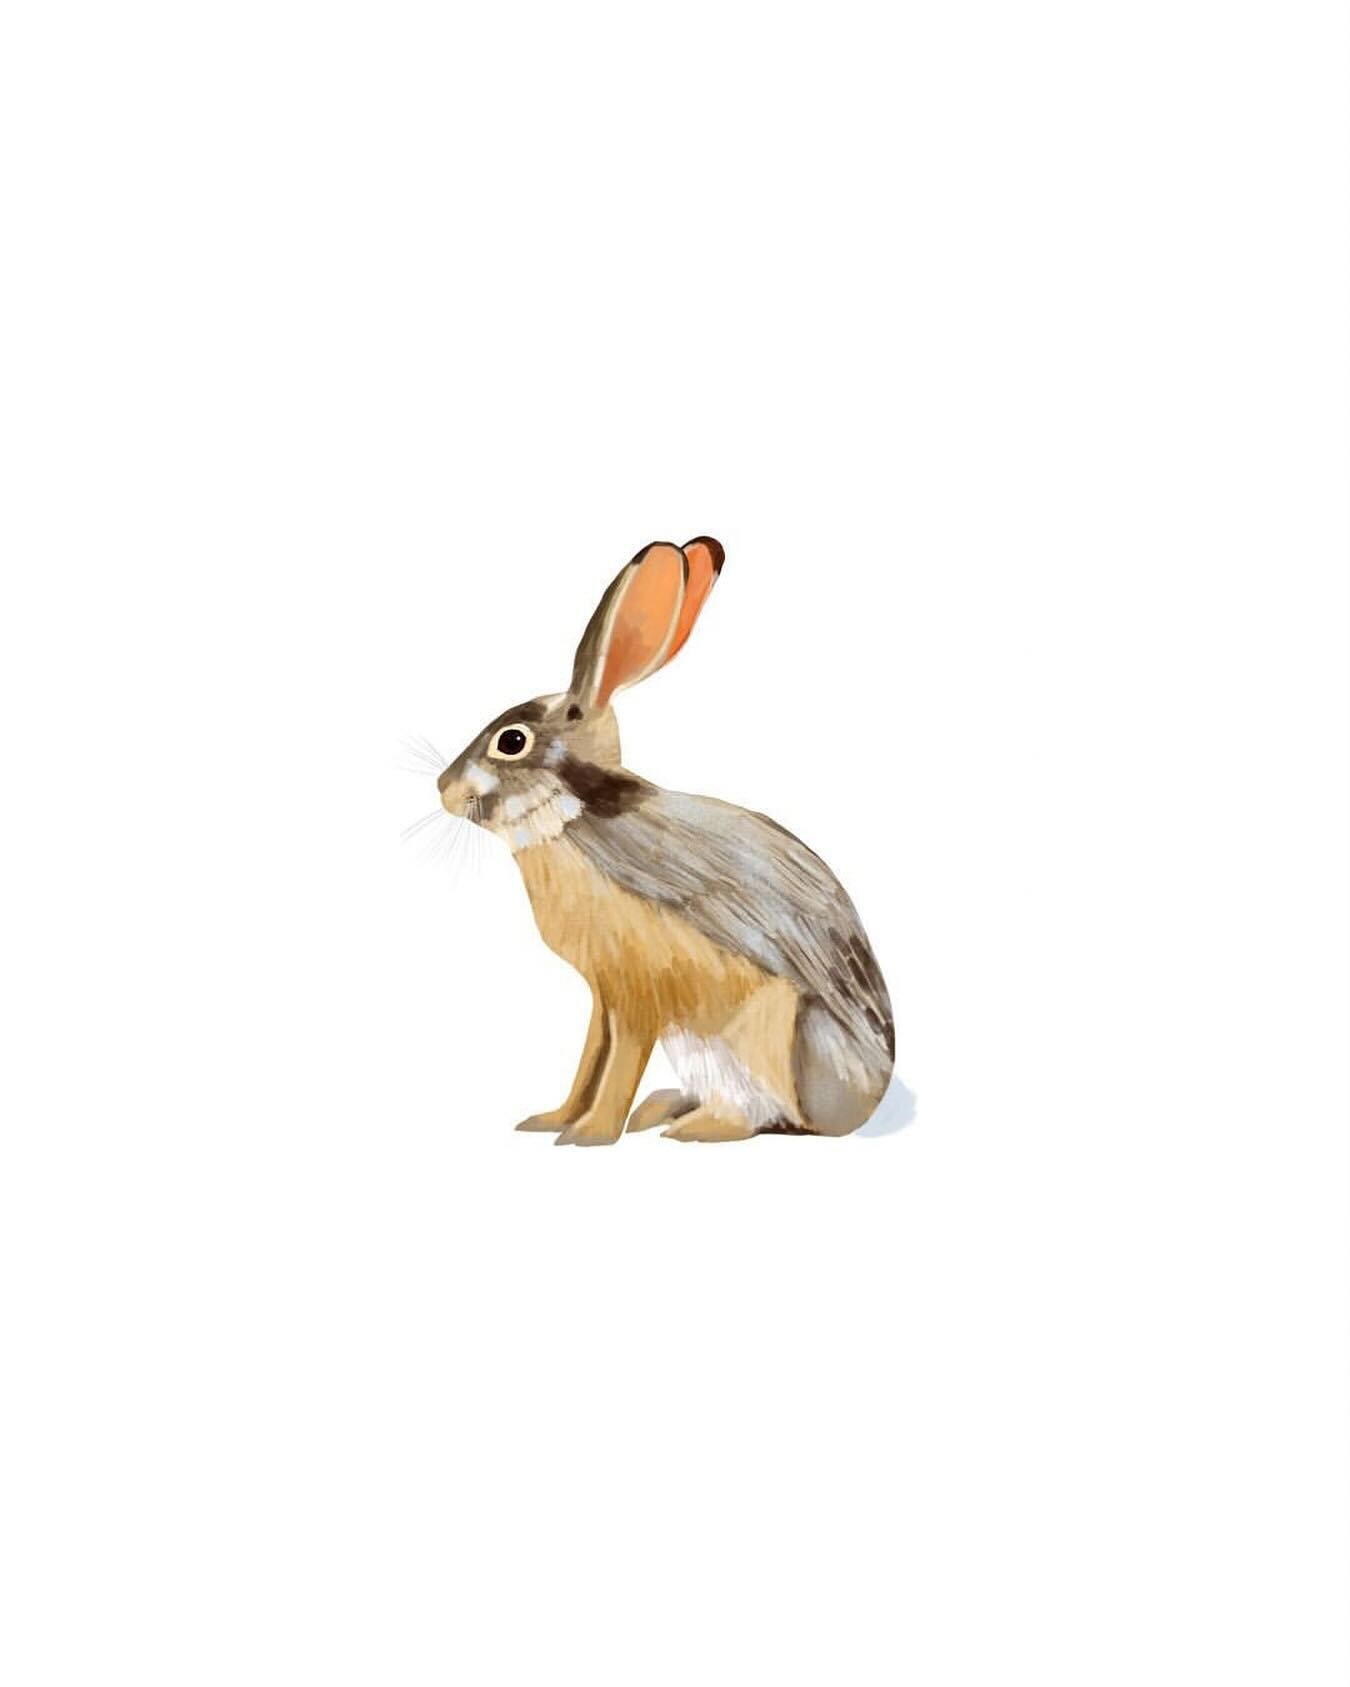 Happy Easter 🐰 

#bunnylovers #easterbunny #happyeastereveryone